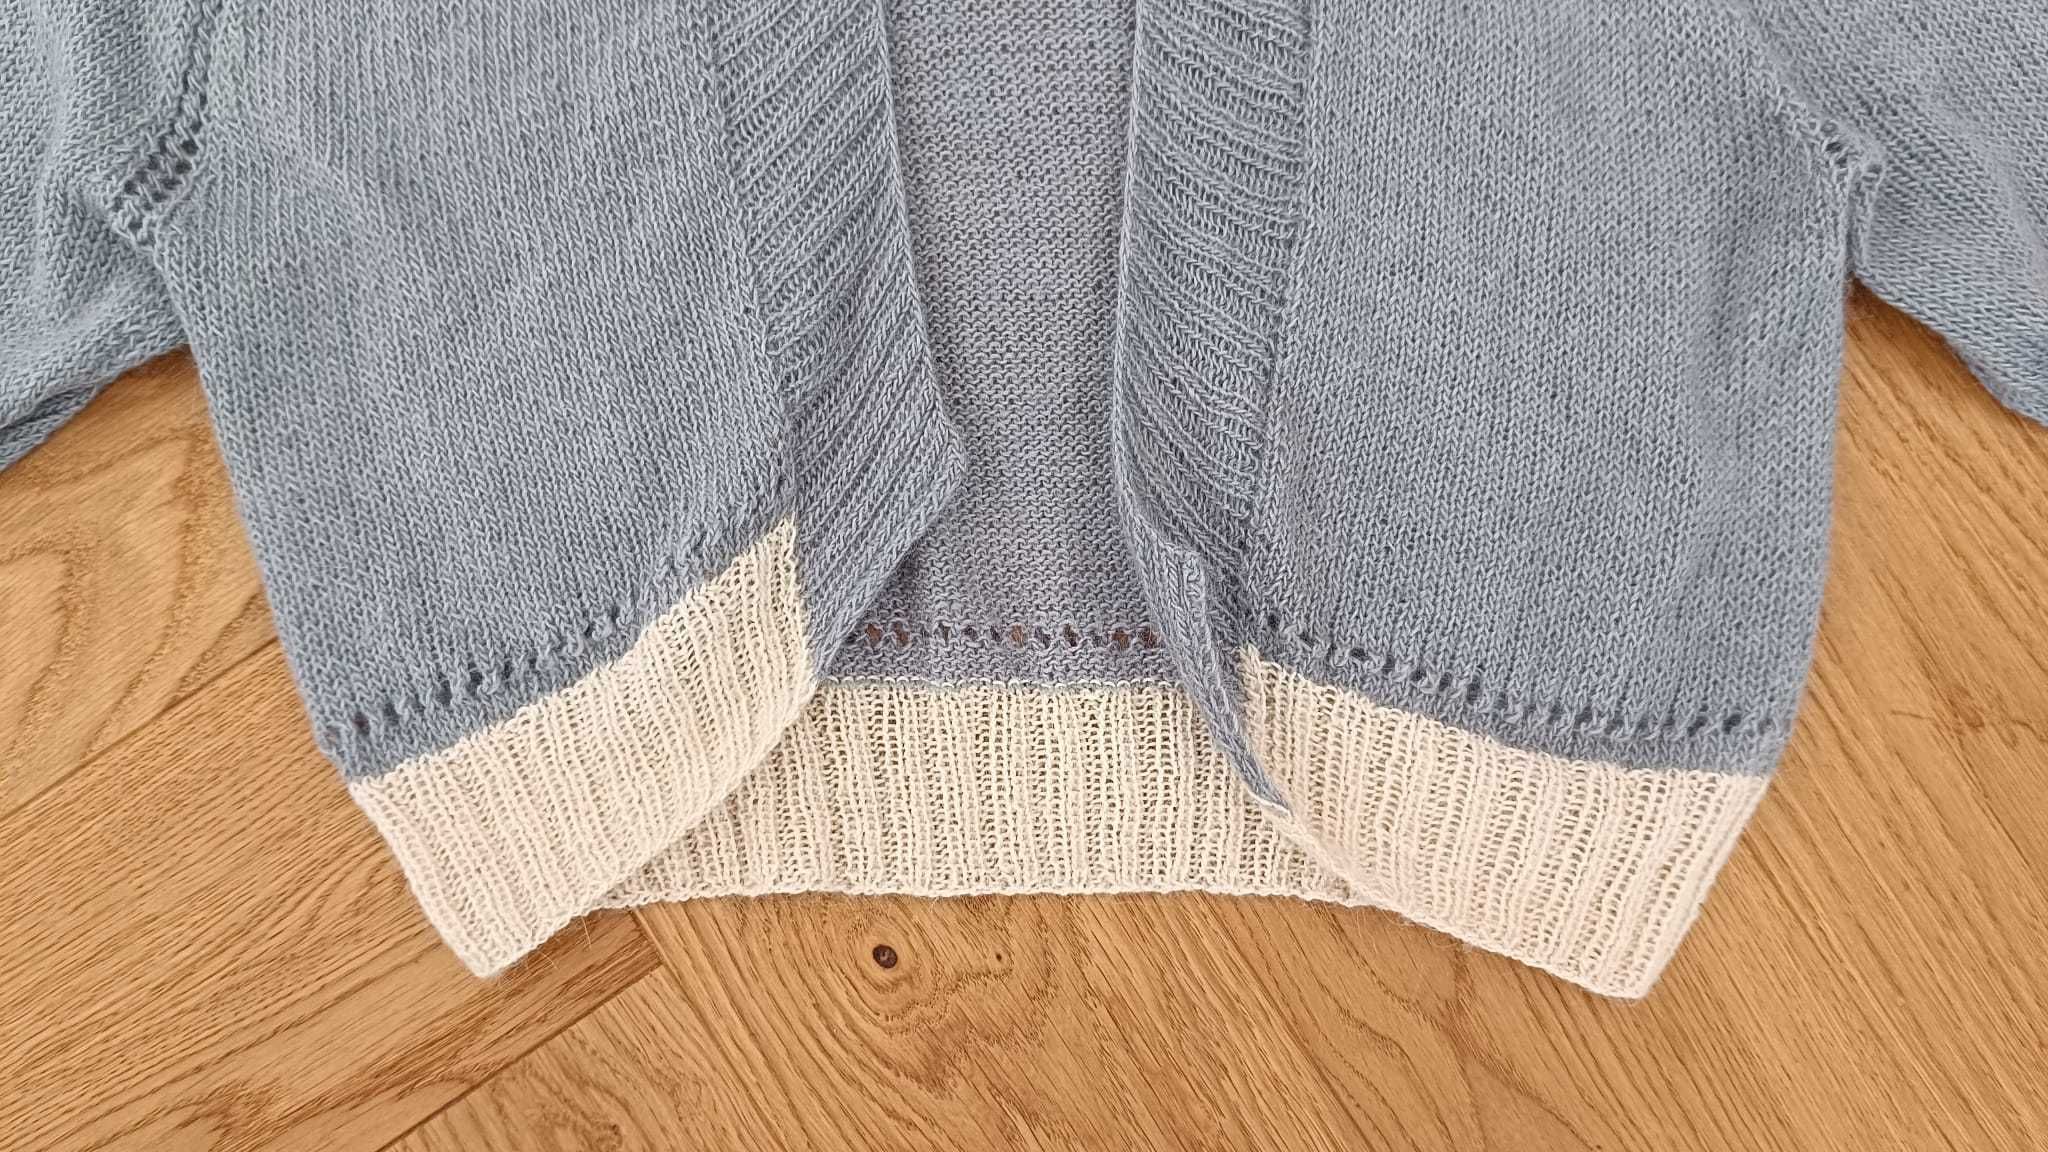 Sweter narzutka handmade XS S M L wełna